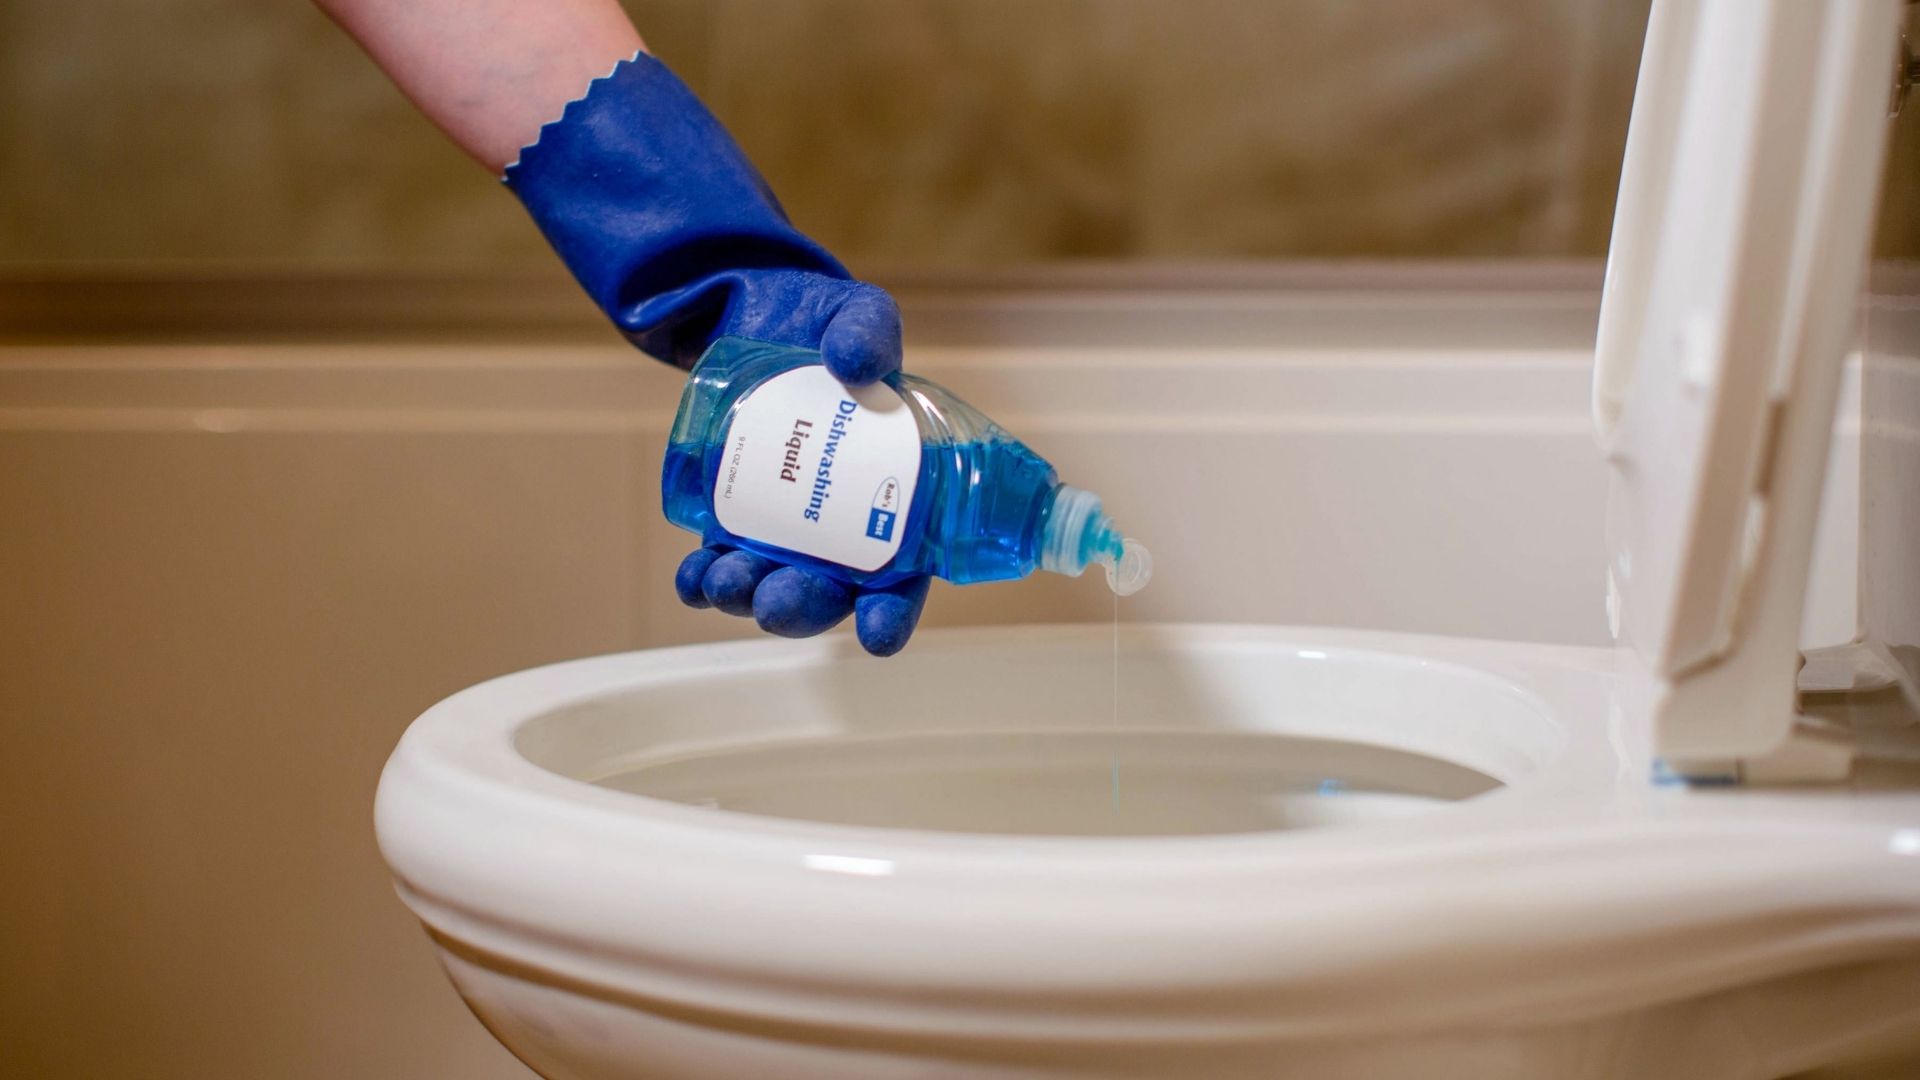 https://zeve.au/woolf/uploads/2021/12/unclogging-toilet-with-blue-dish-soap.jpg